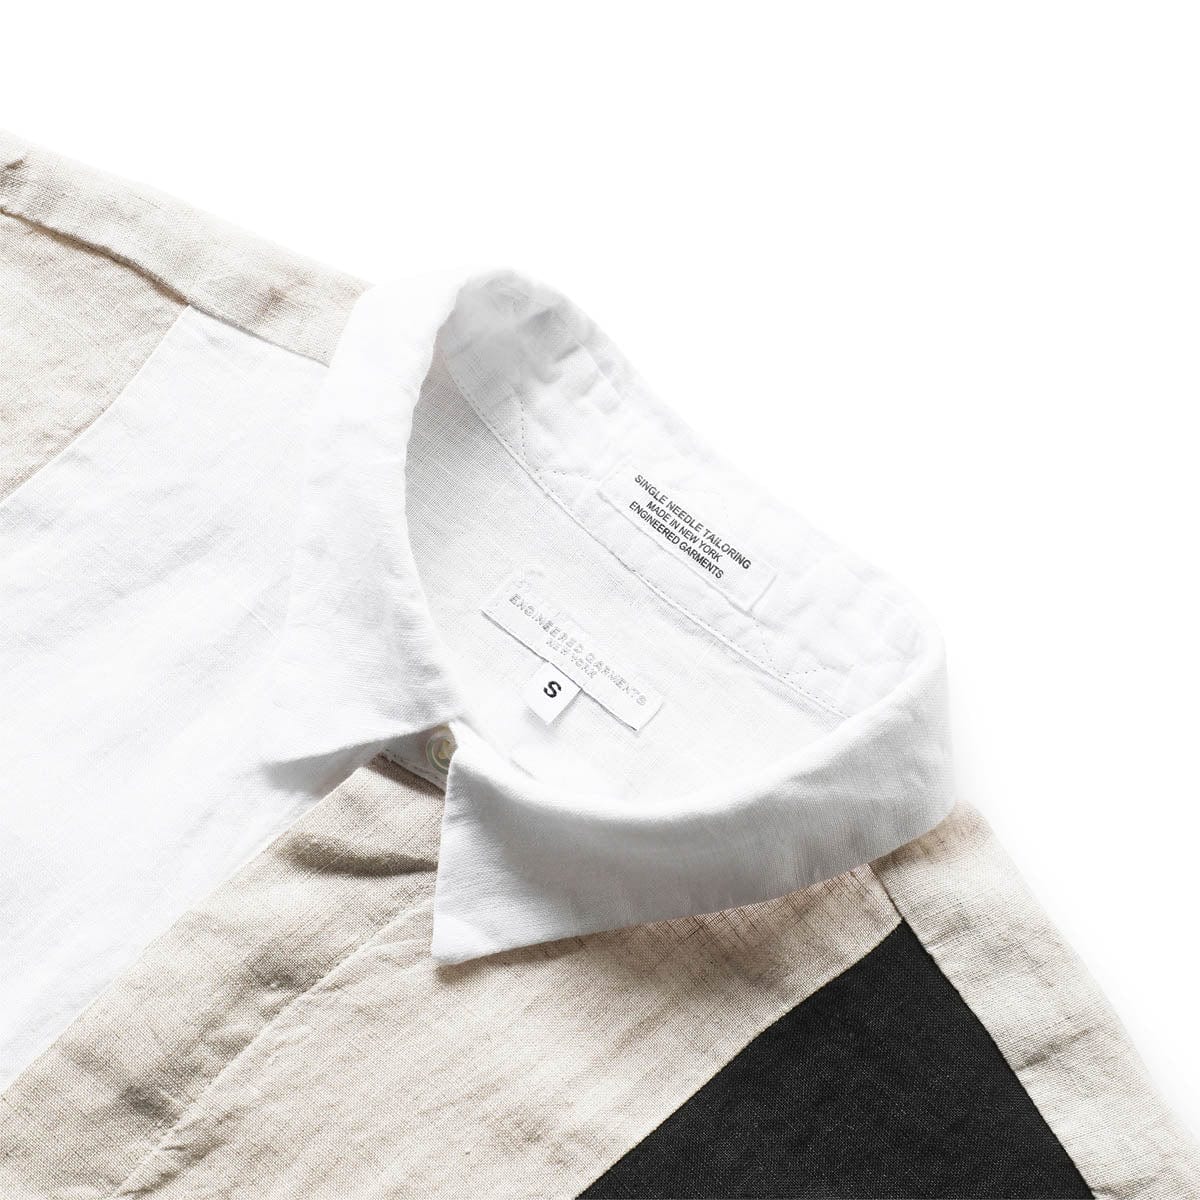 Engineered Garments Shirts COMBO SHORT COLLAR SHIRT